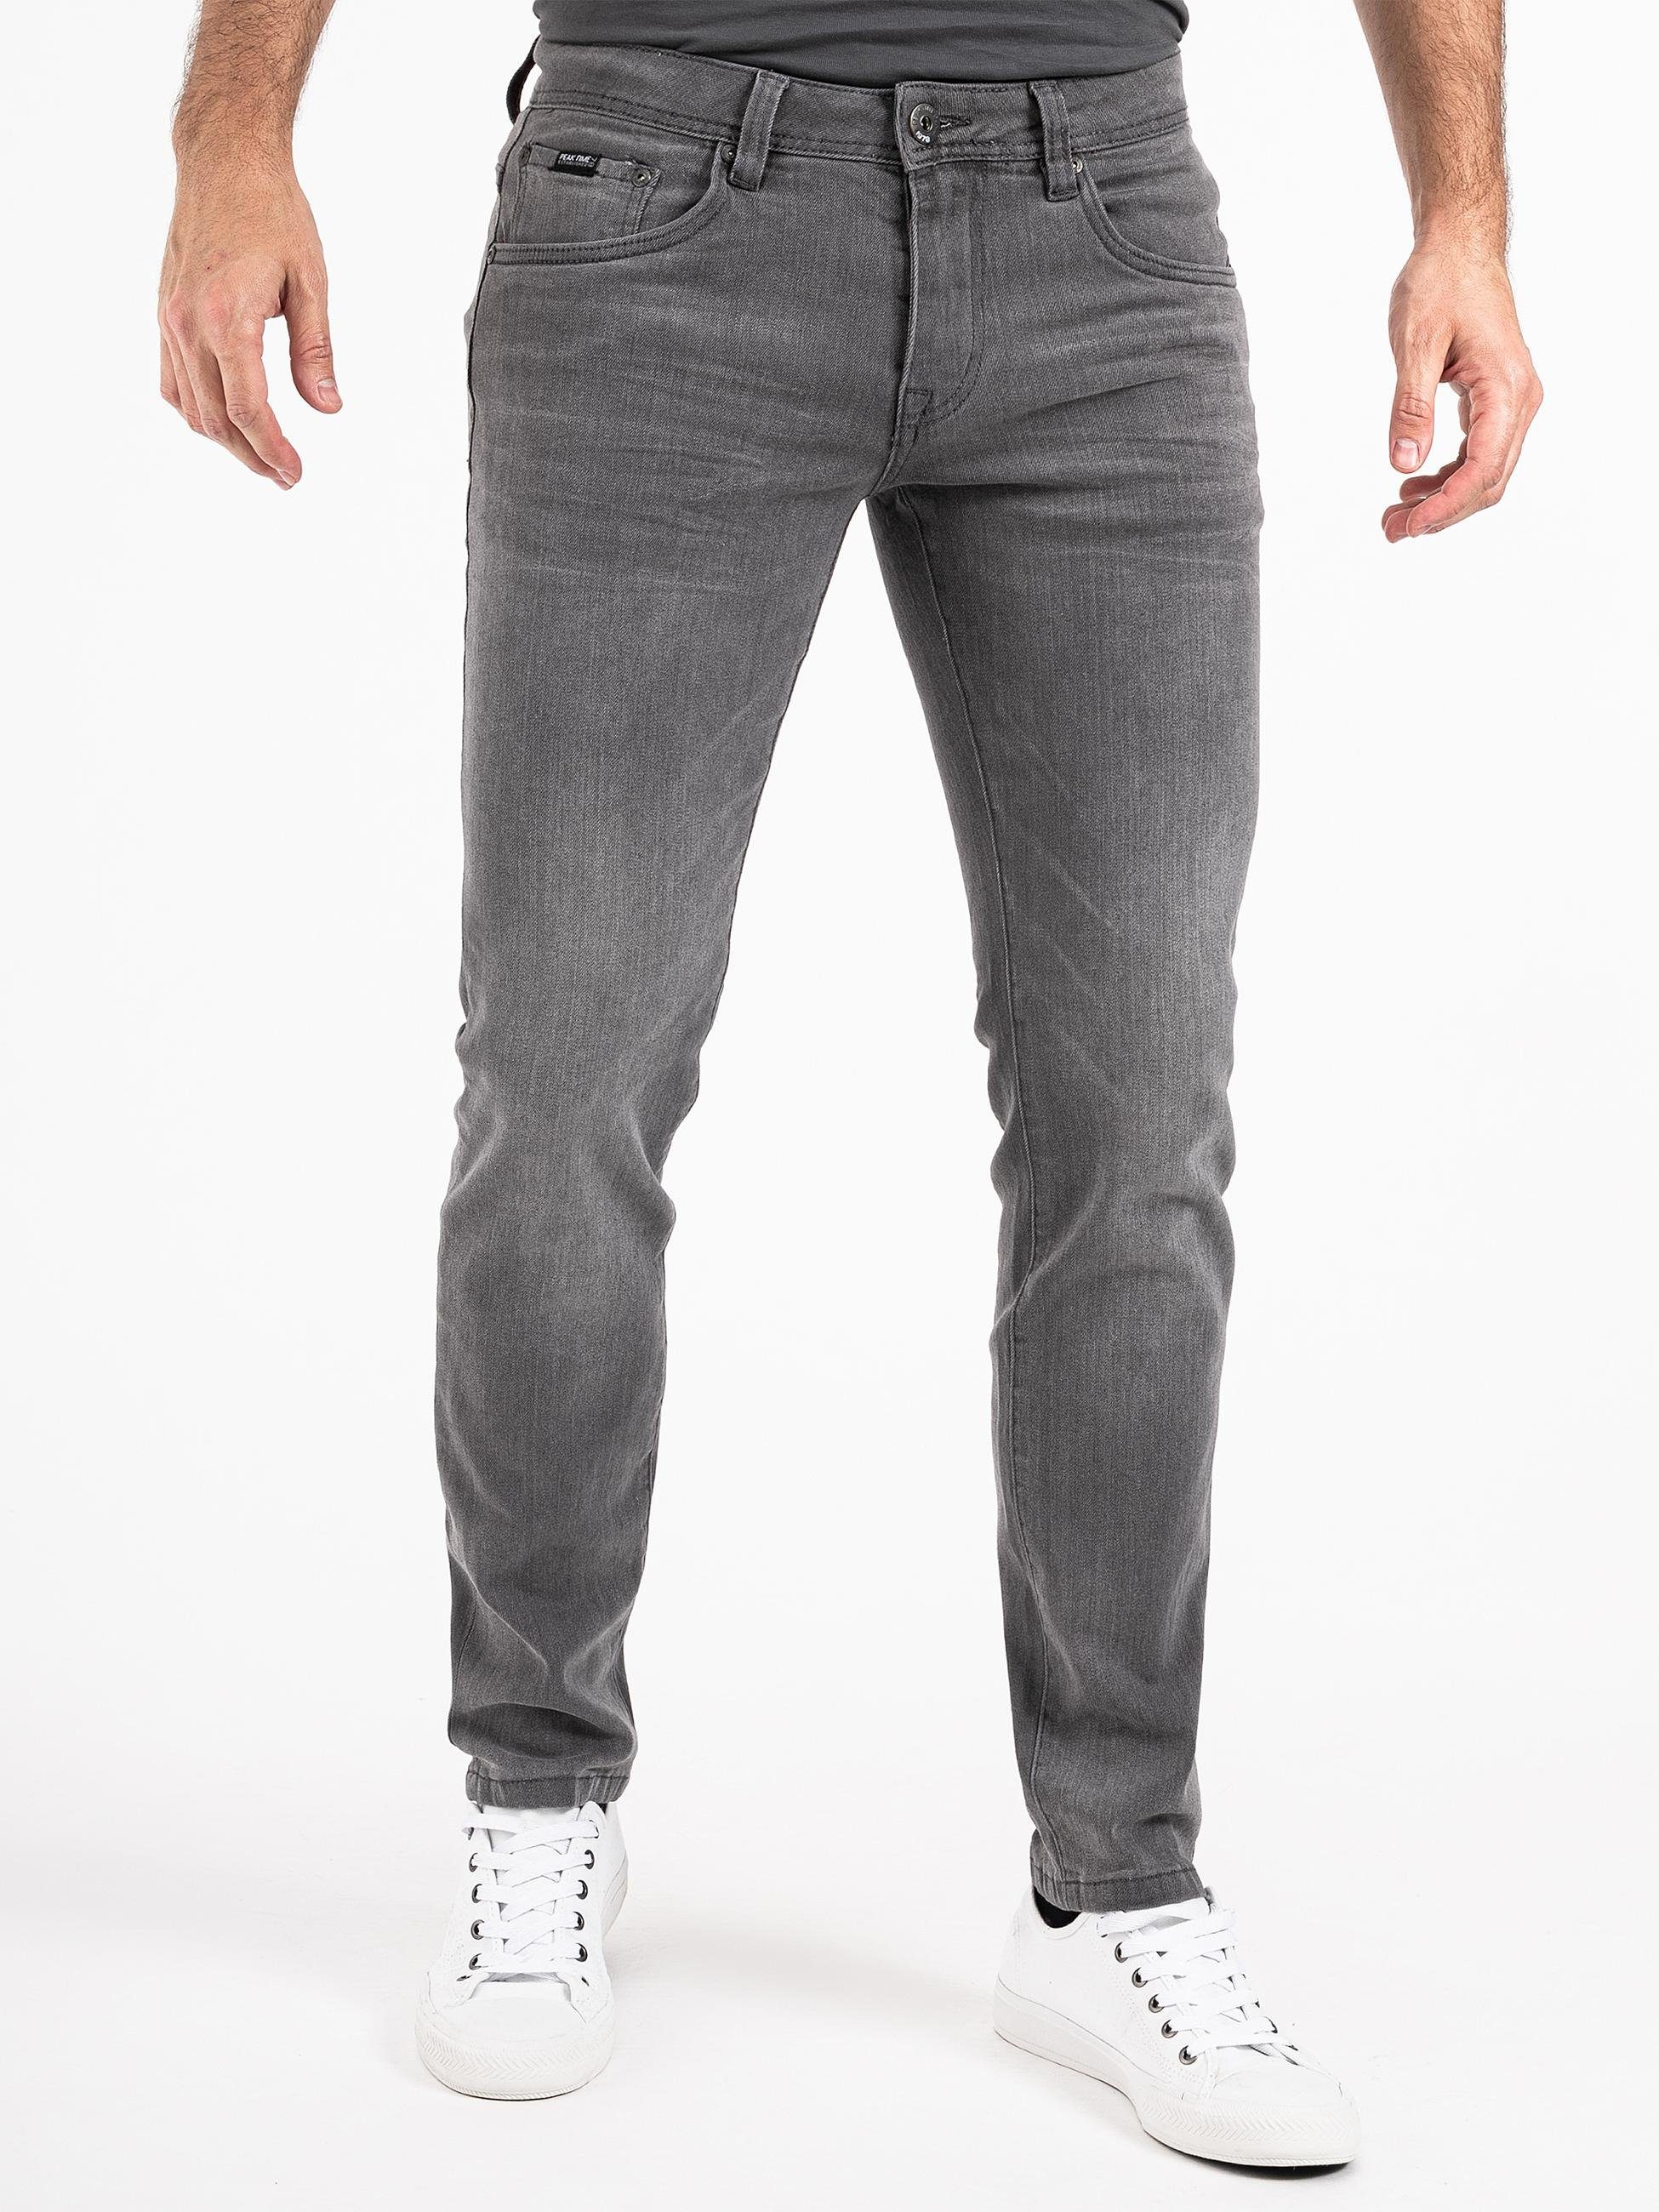 PEAK TIME Slim-fit-Jeans Mailand Herren Jeans mit super hohem Stretch-Anteil hellgrau